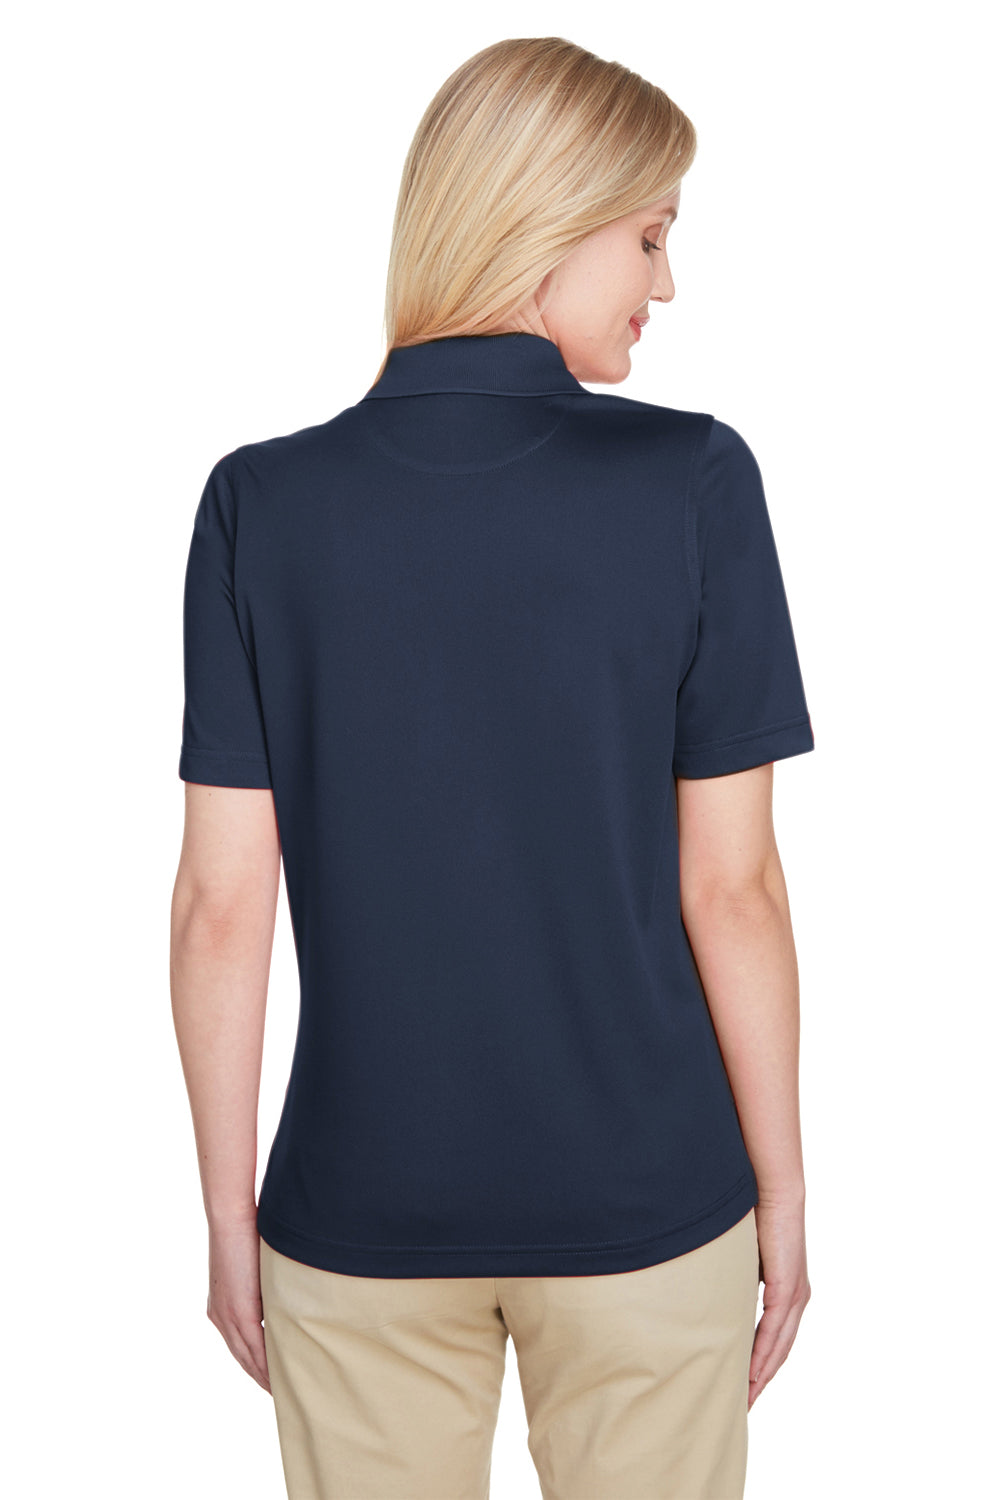 Harriton M348W Womens Advantage Performance Moisture Wicking Short Sleeve Polo Shirt Navy Blue Back